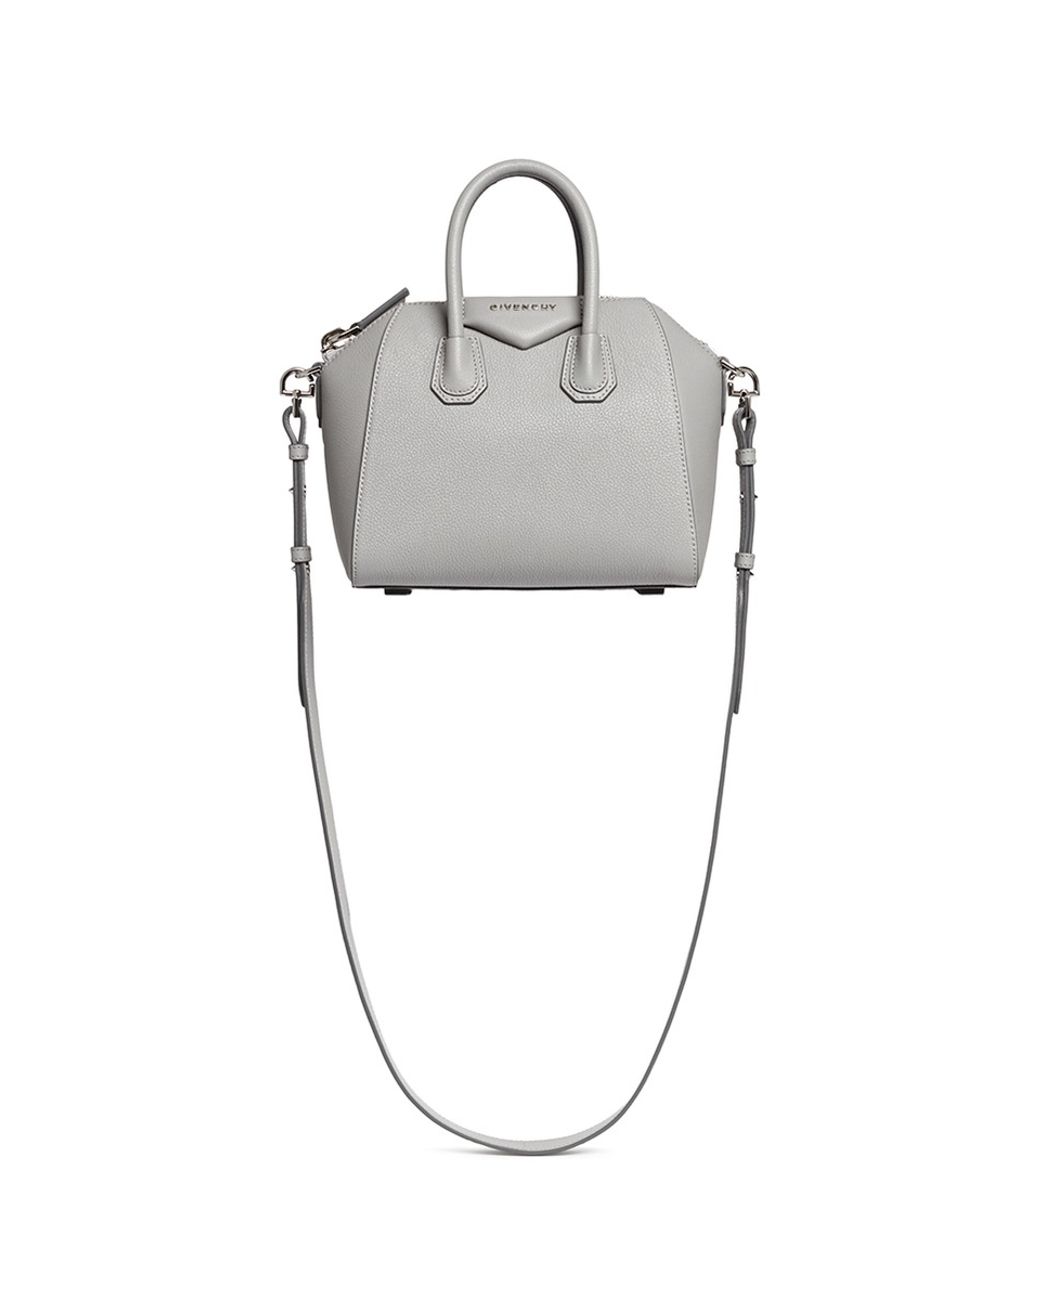 Givenchy Antigona Mini Leather Shoulder Bag in Gray | Lyst